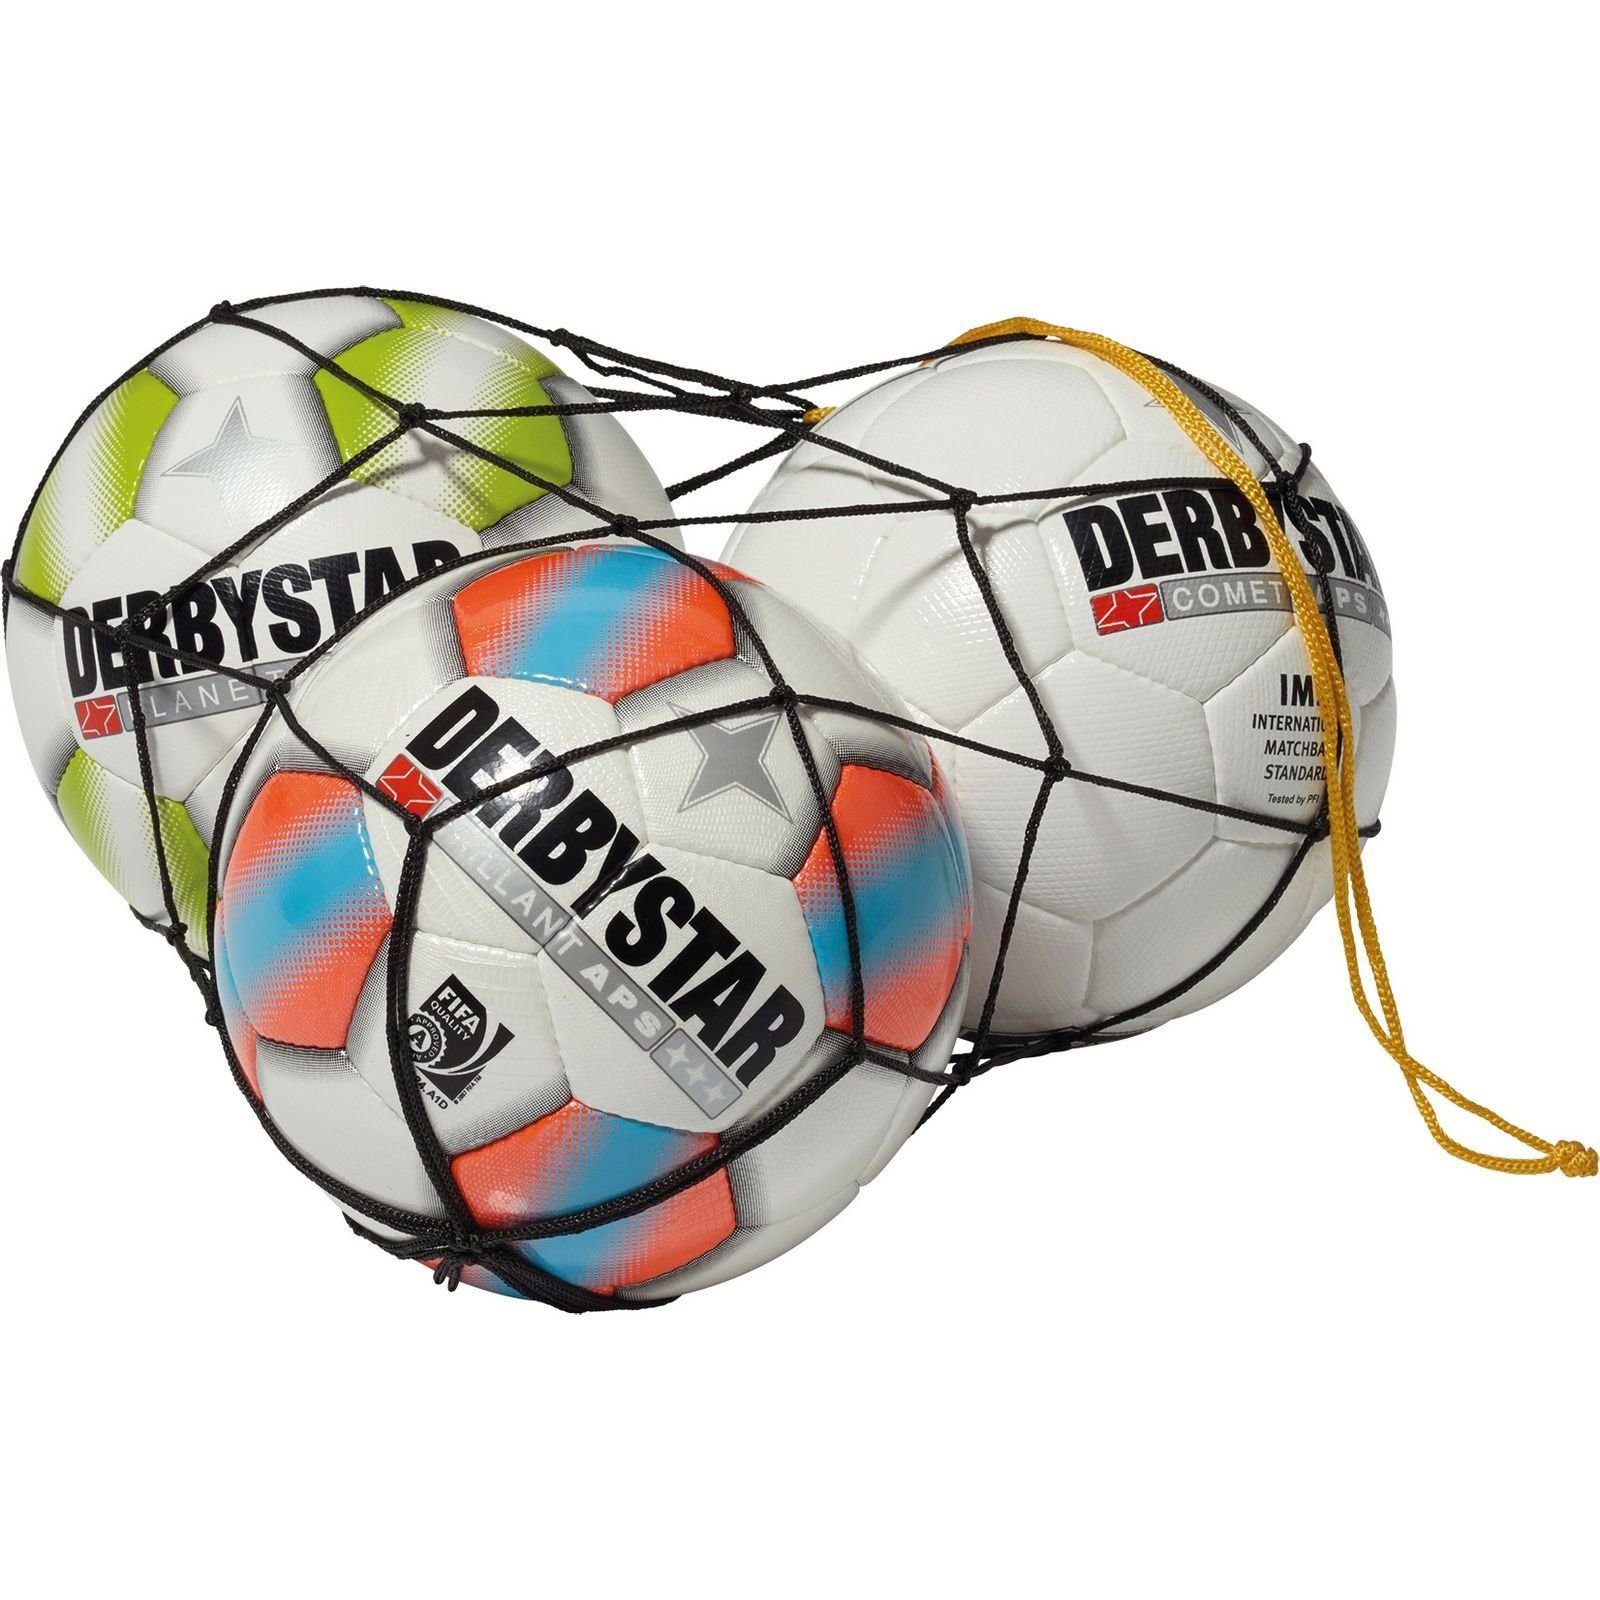 Derbystar Basketballnetz Ballnetz Polyester, für Fußbälle